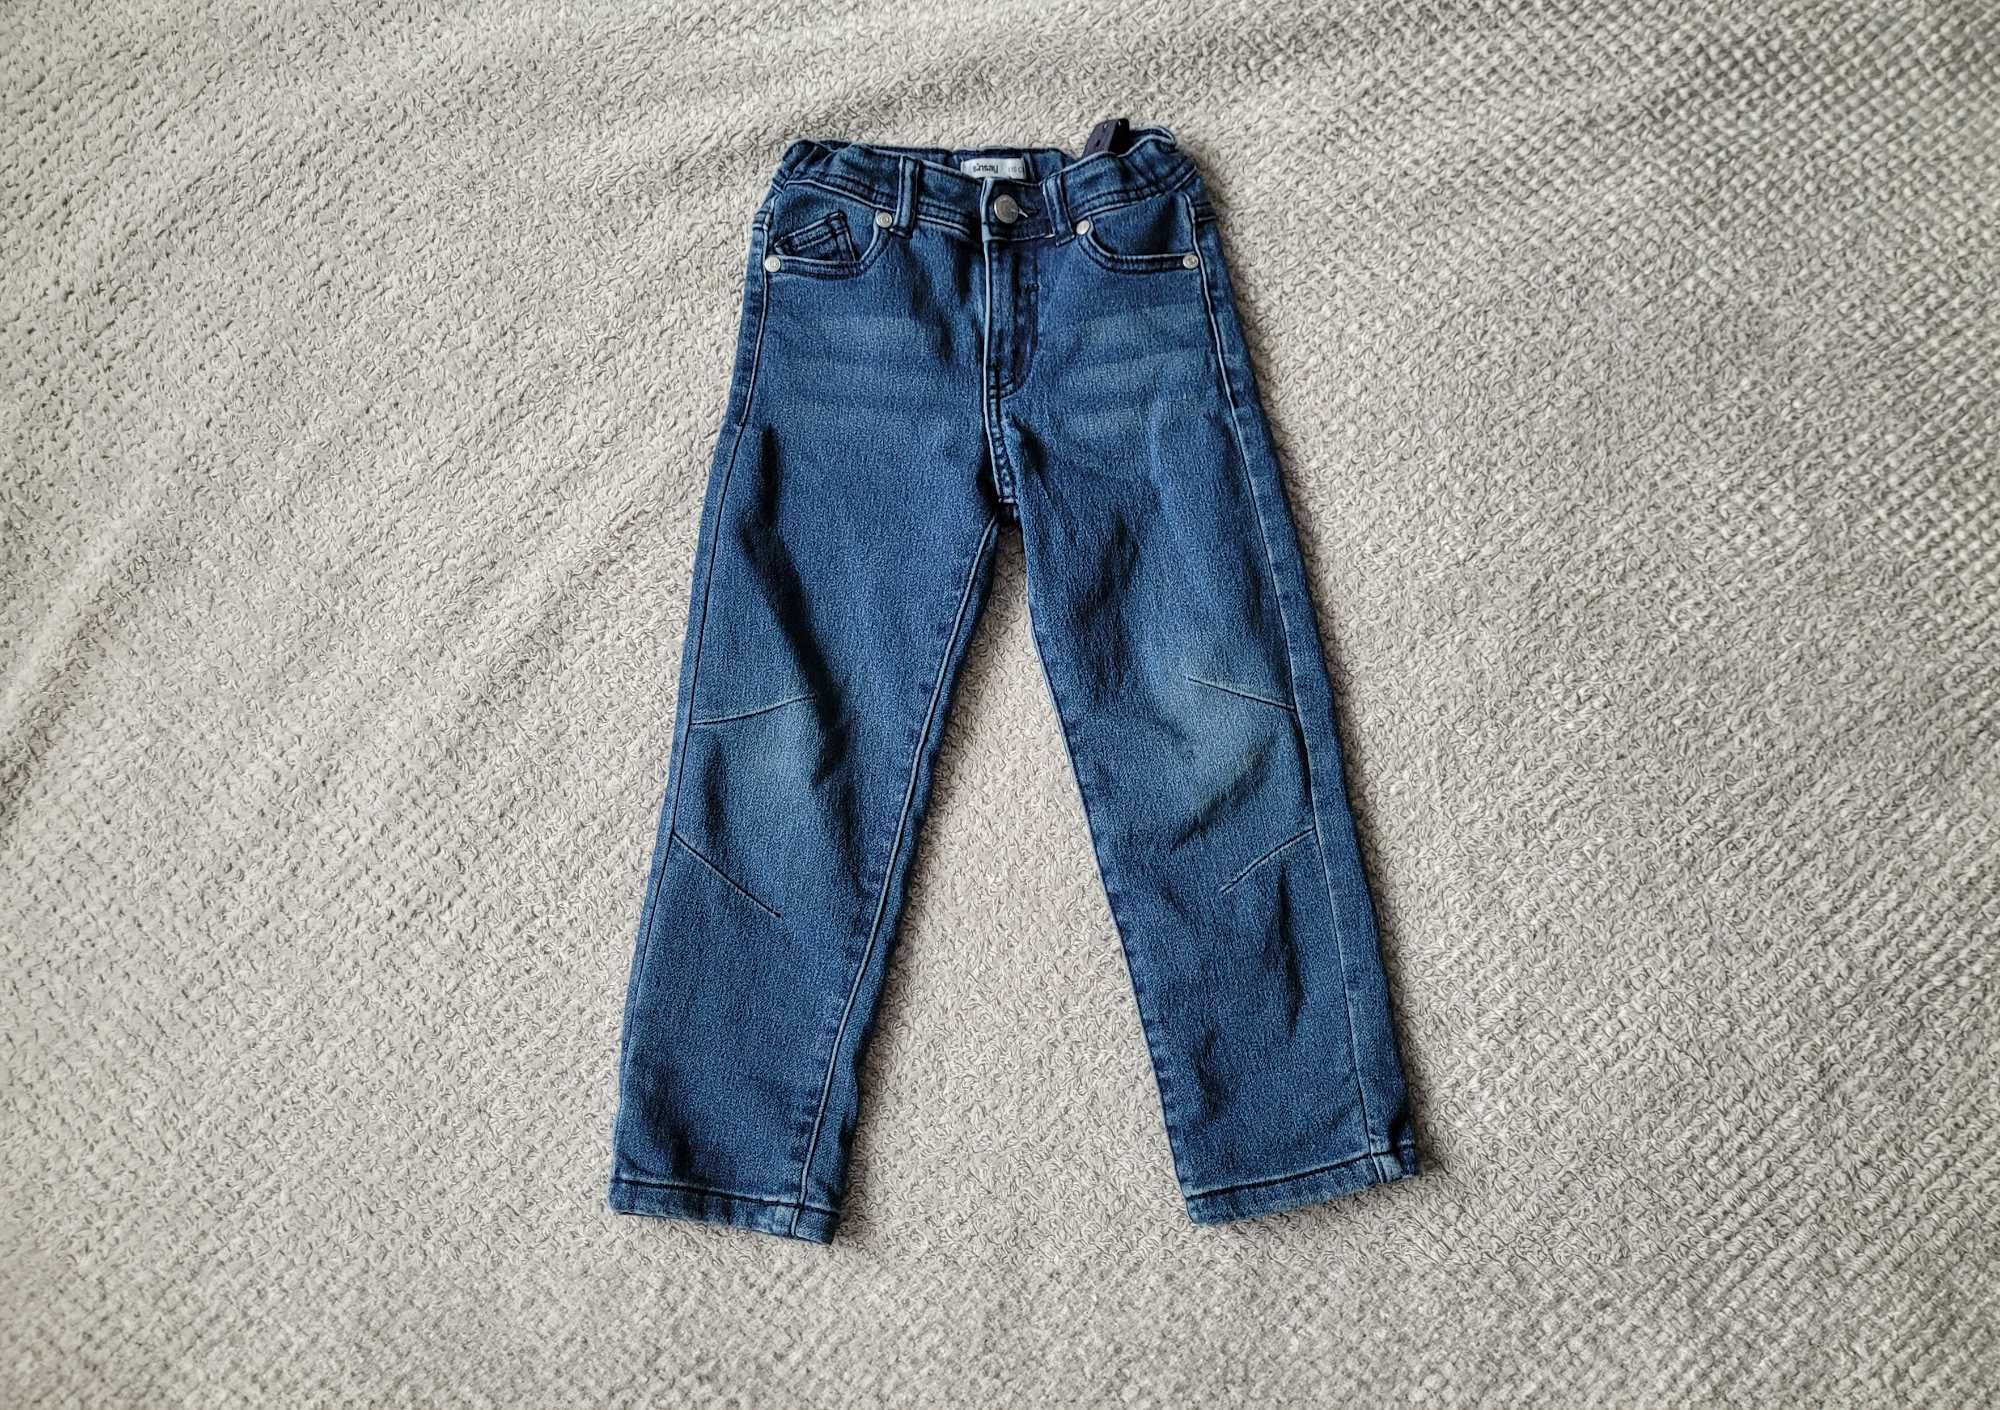 Spodnie jeansy z regulacją w pasie, rozmiar 110, Sinsay